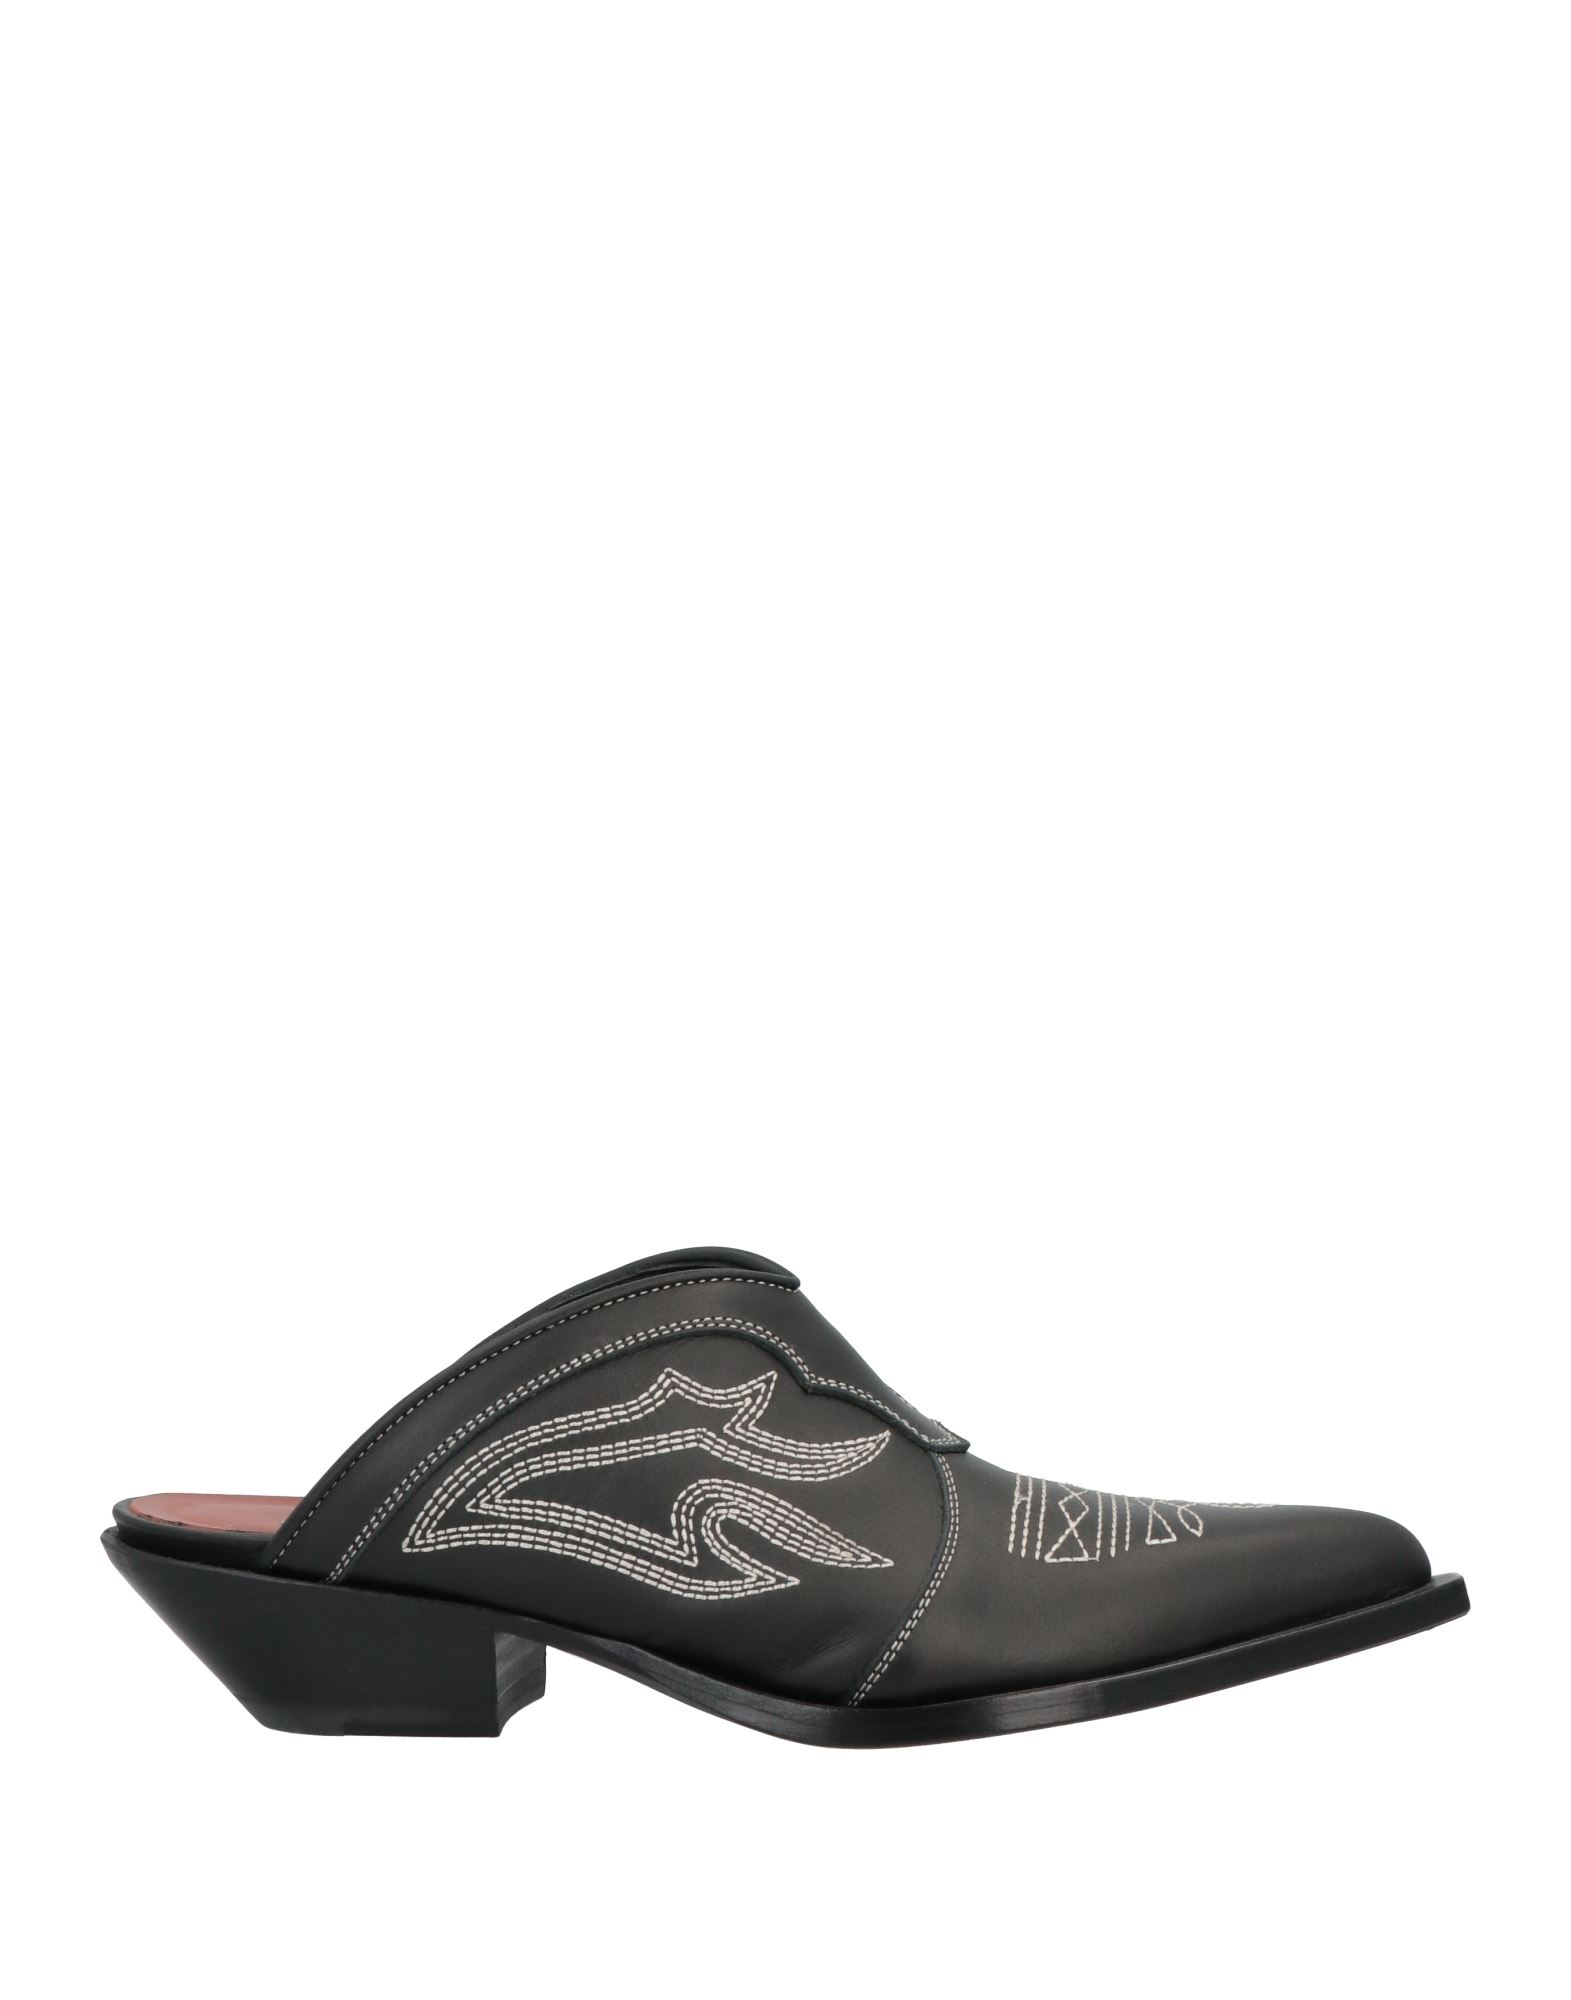 Shop Sonora Woman Mules & Clogs Black Size 7 Soft Leather